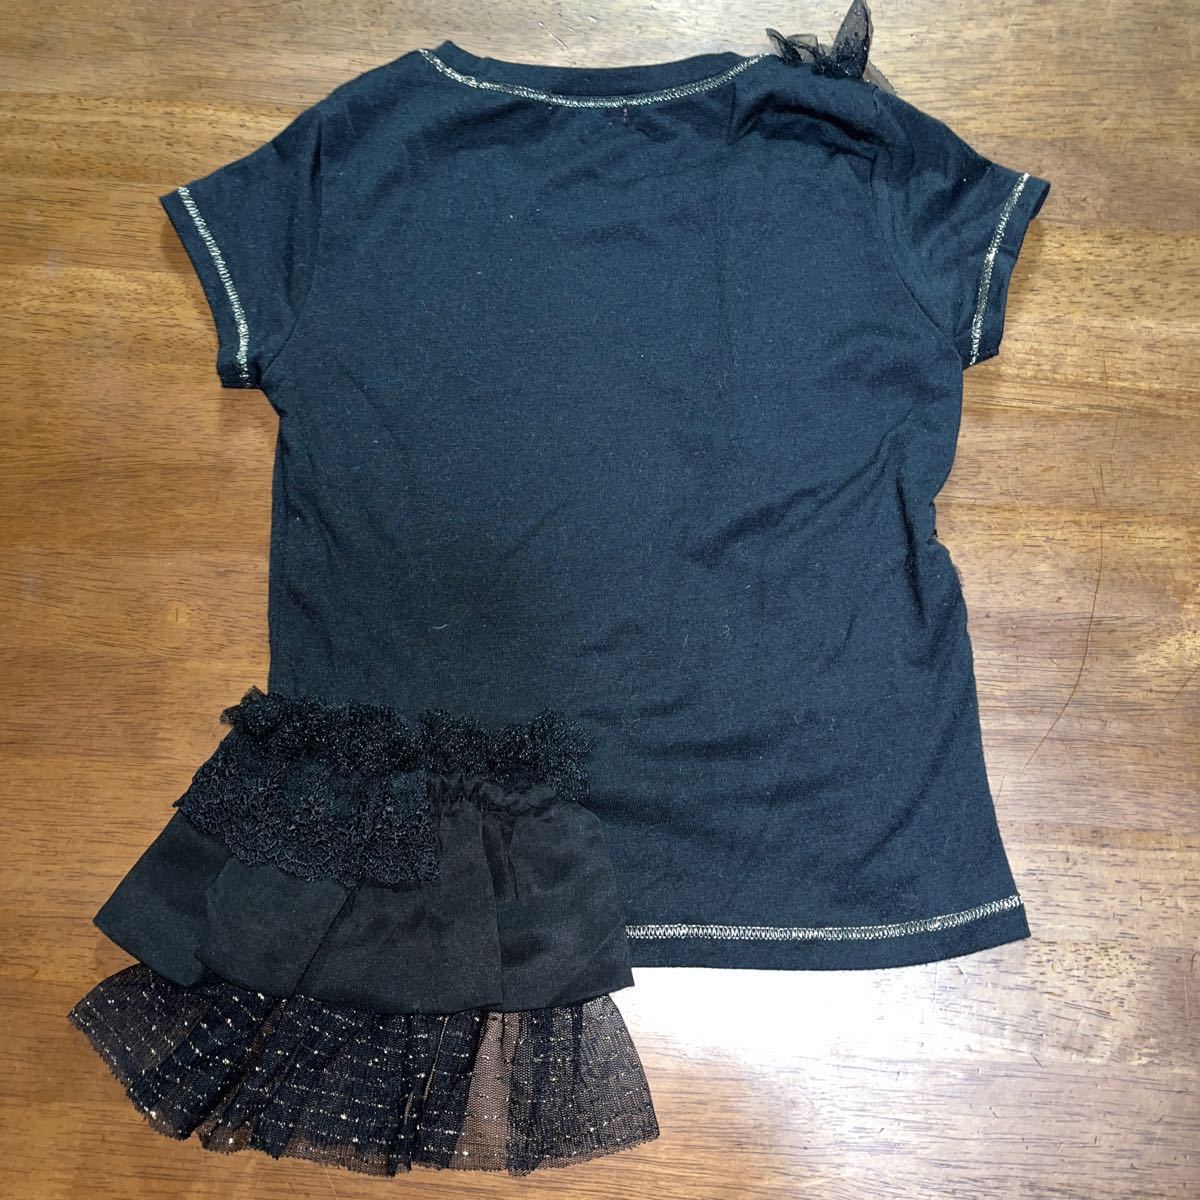 [RONI|roni.] футболка мини-юбка chu-ru юбка лента размер SM 110cm 120. б/у чёрный верх и низ 2 шт. комплект 